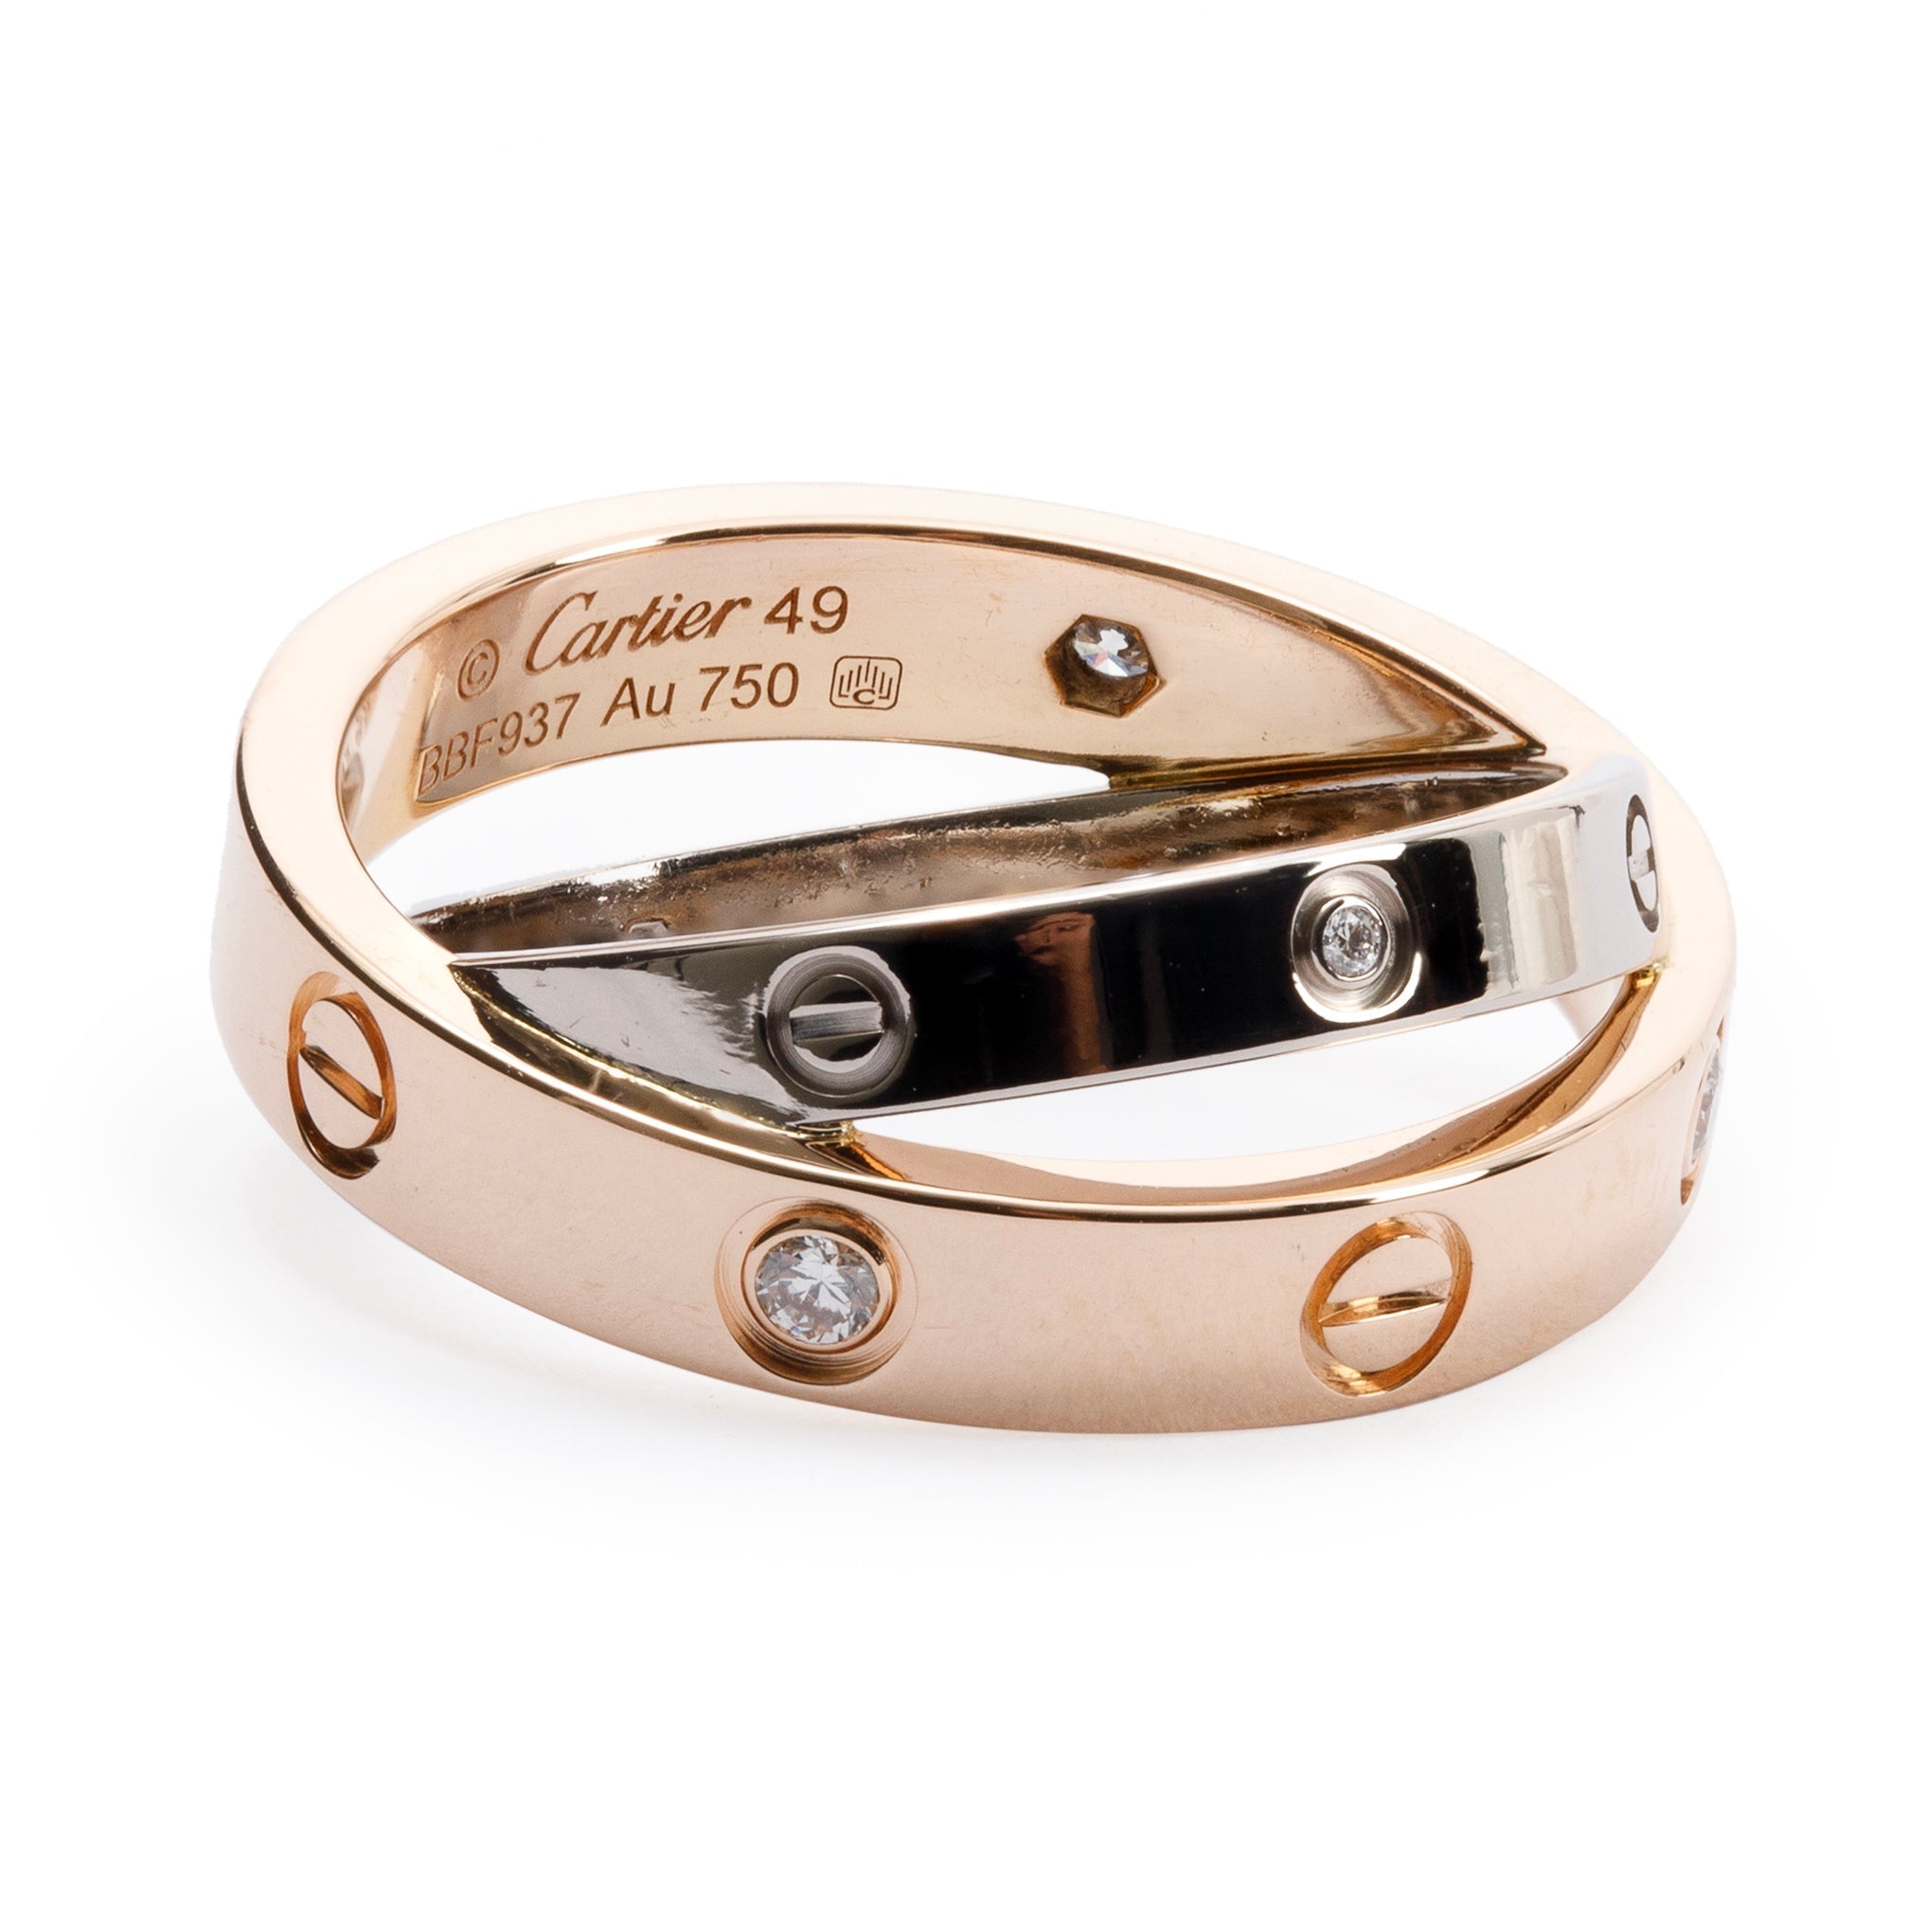 Shop Cartier LOVE Love ring, 6 diamonds (B4094300) by Chocolate11 | BUYMA